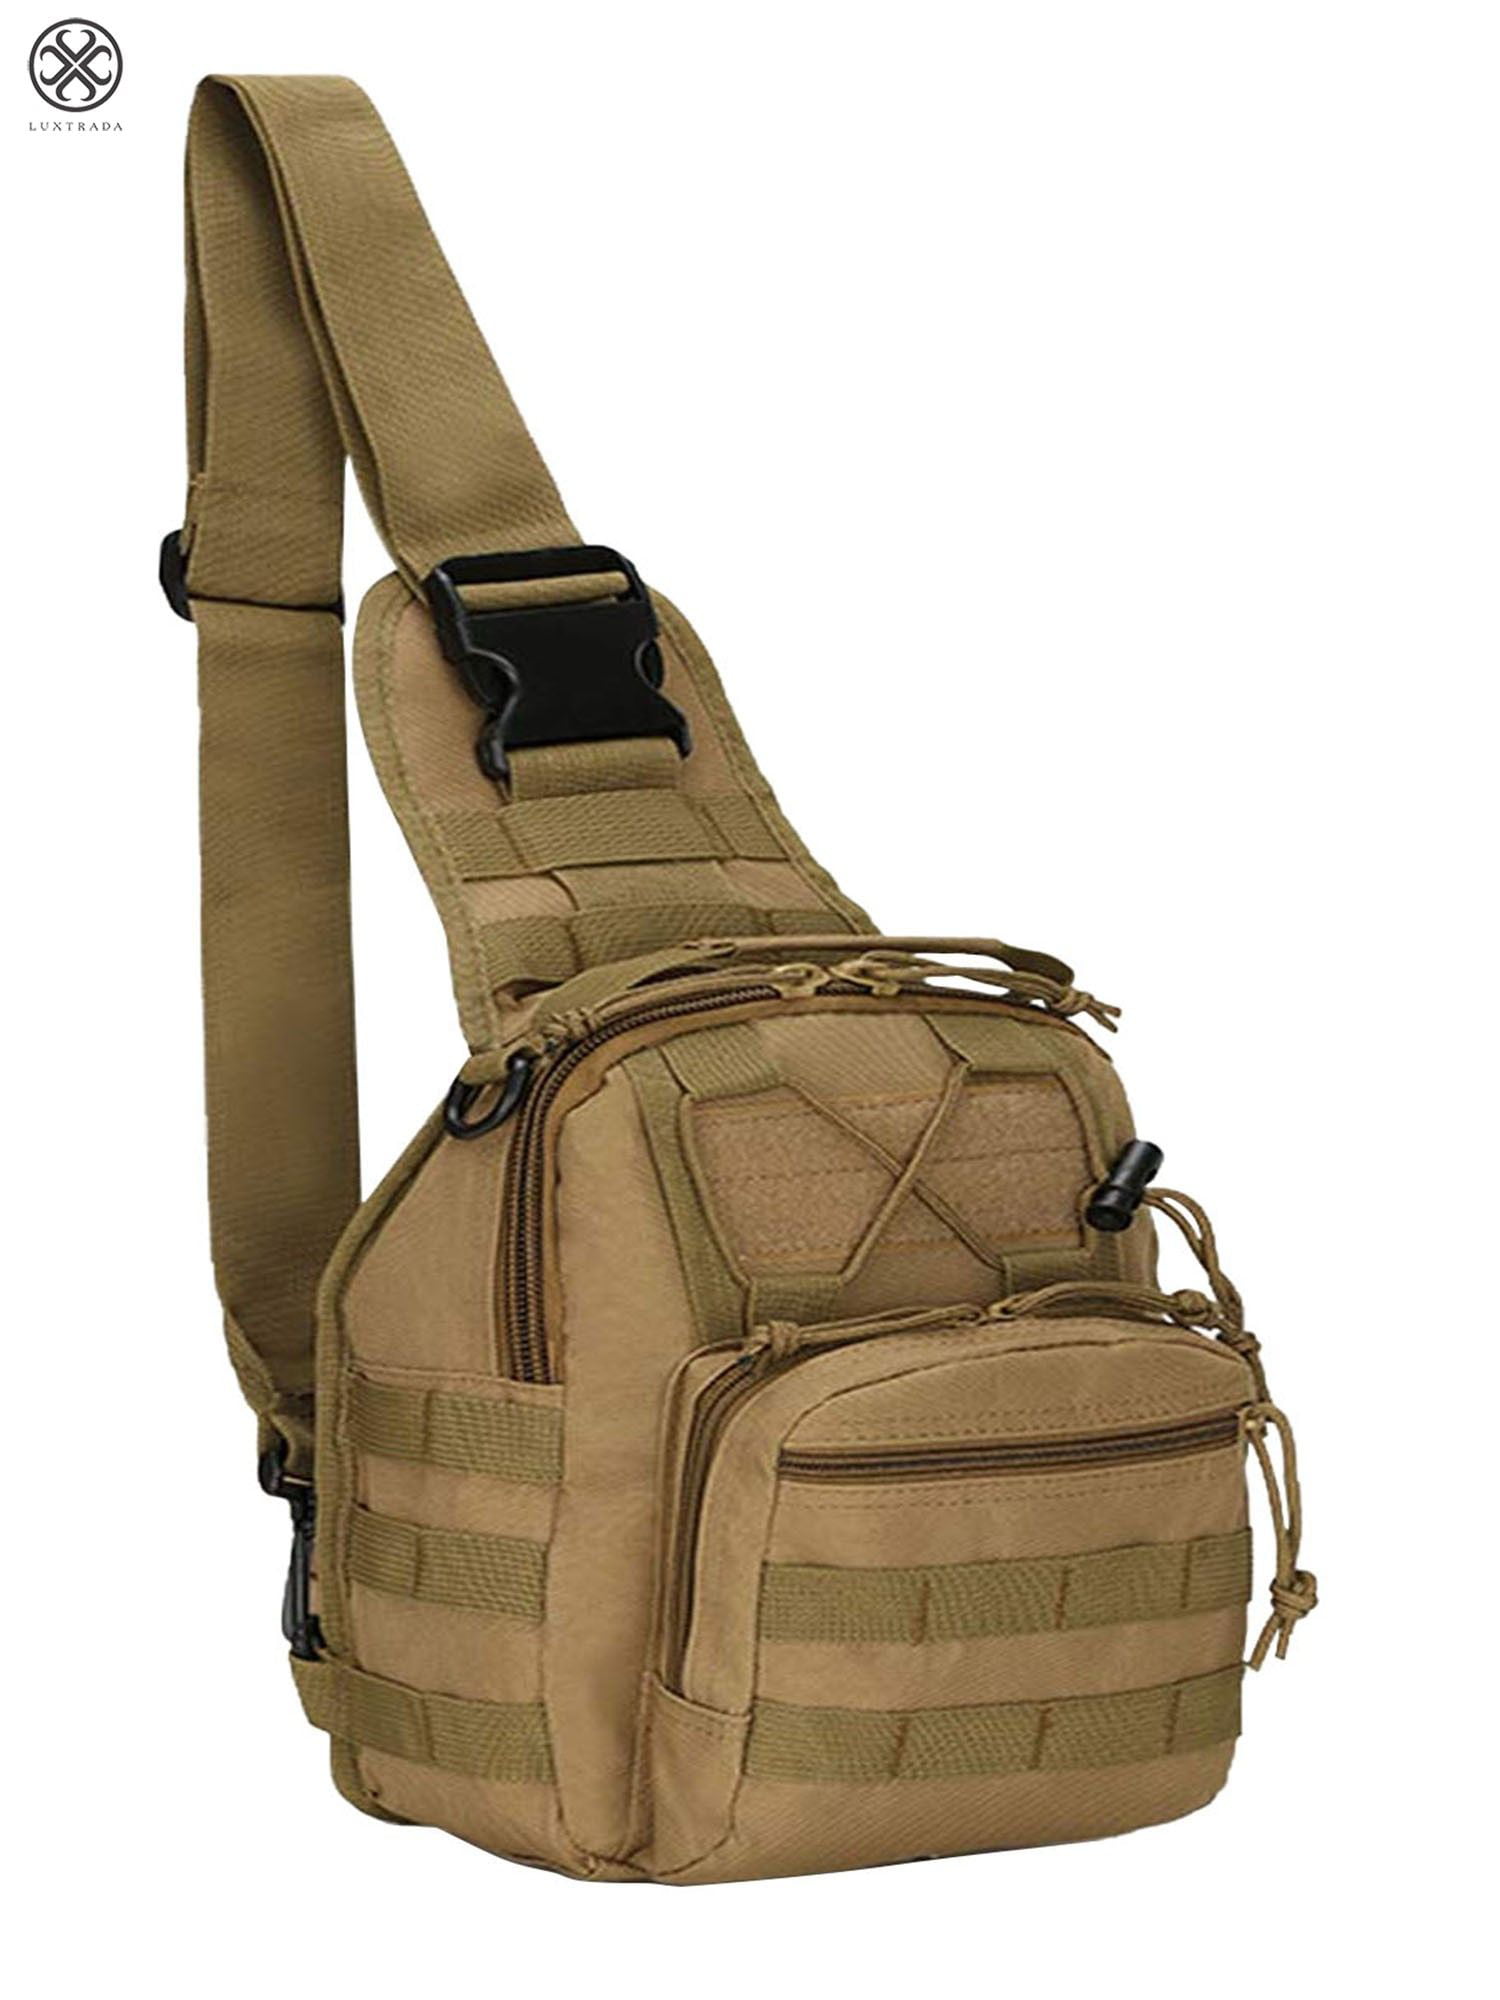 Tactical chest bag backpack outdoor shoulder camp hiking bag for military travel